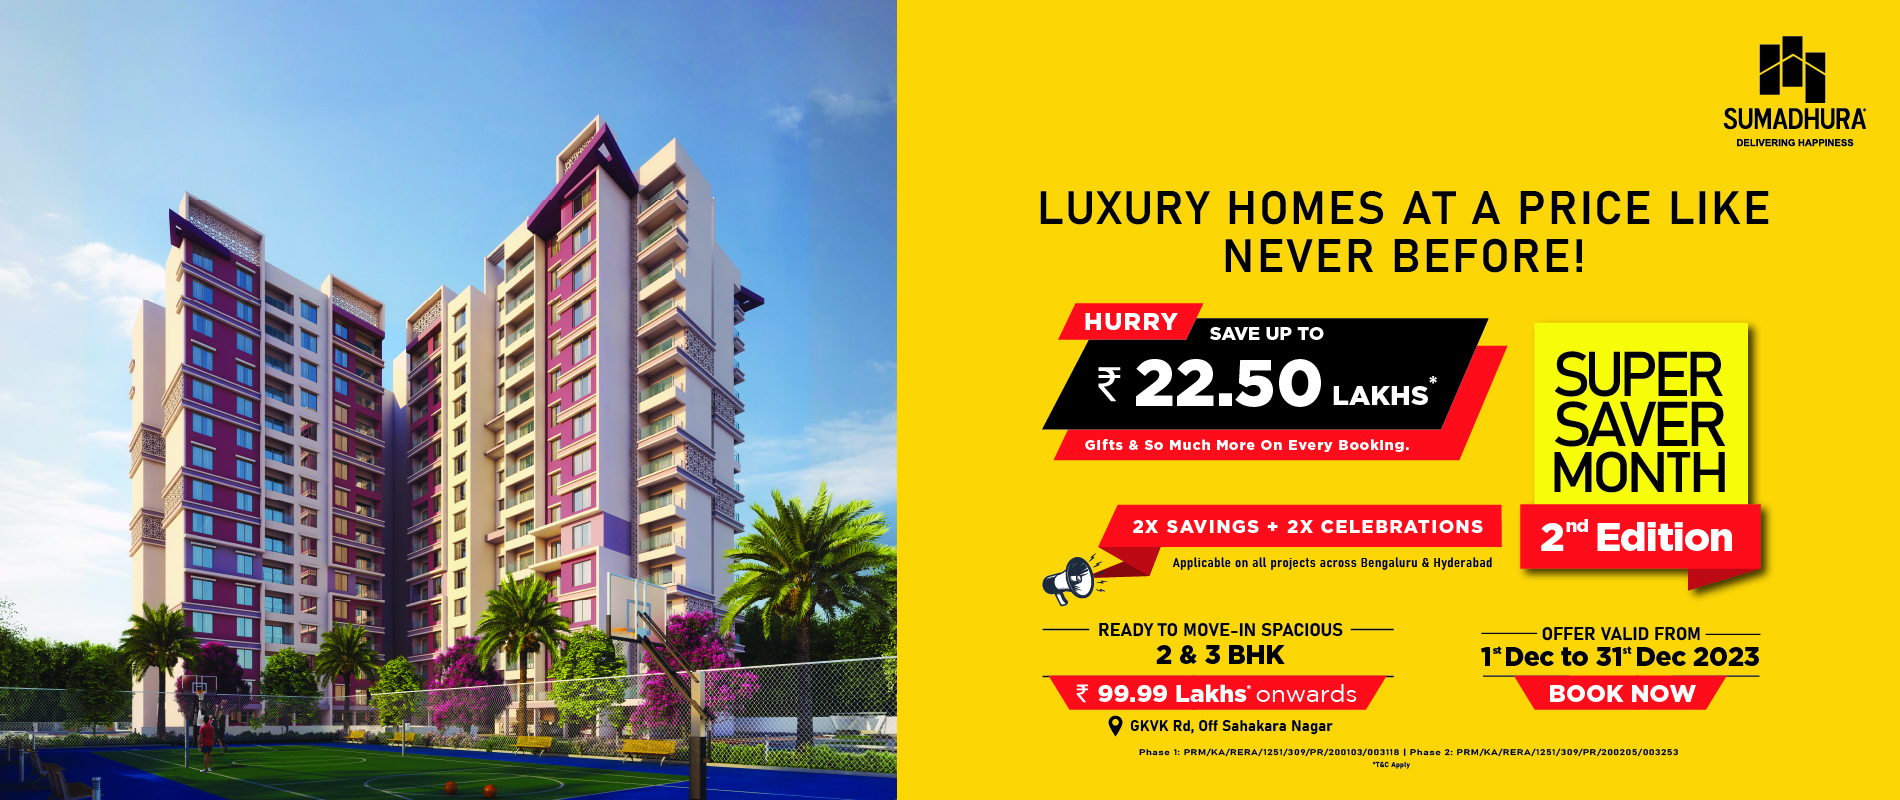 Sumadhura's Super Saver Deals on 2,3,4 Bhk Apartments in Bangalore